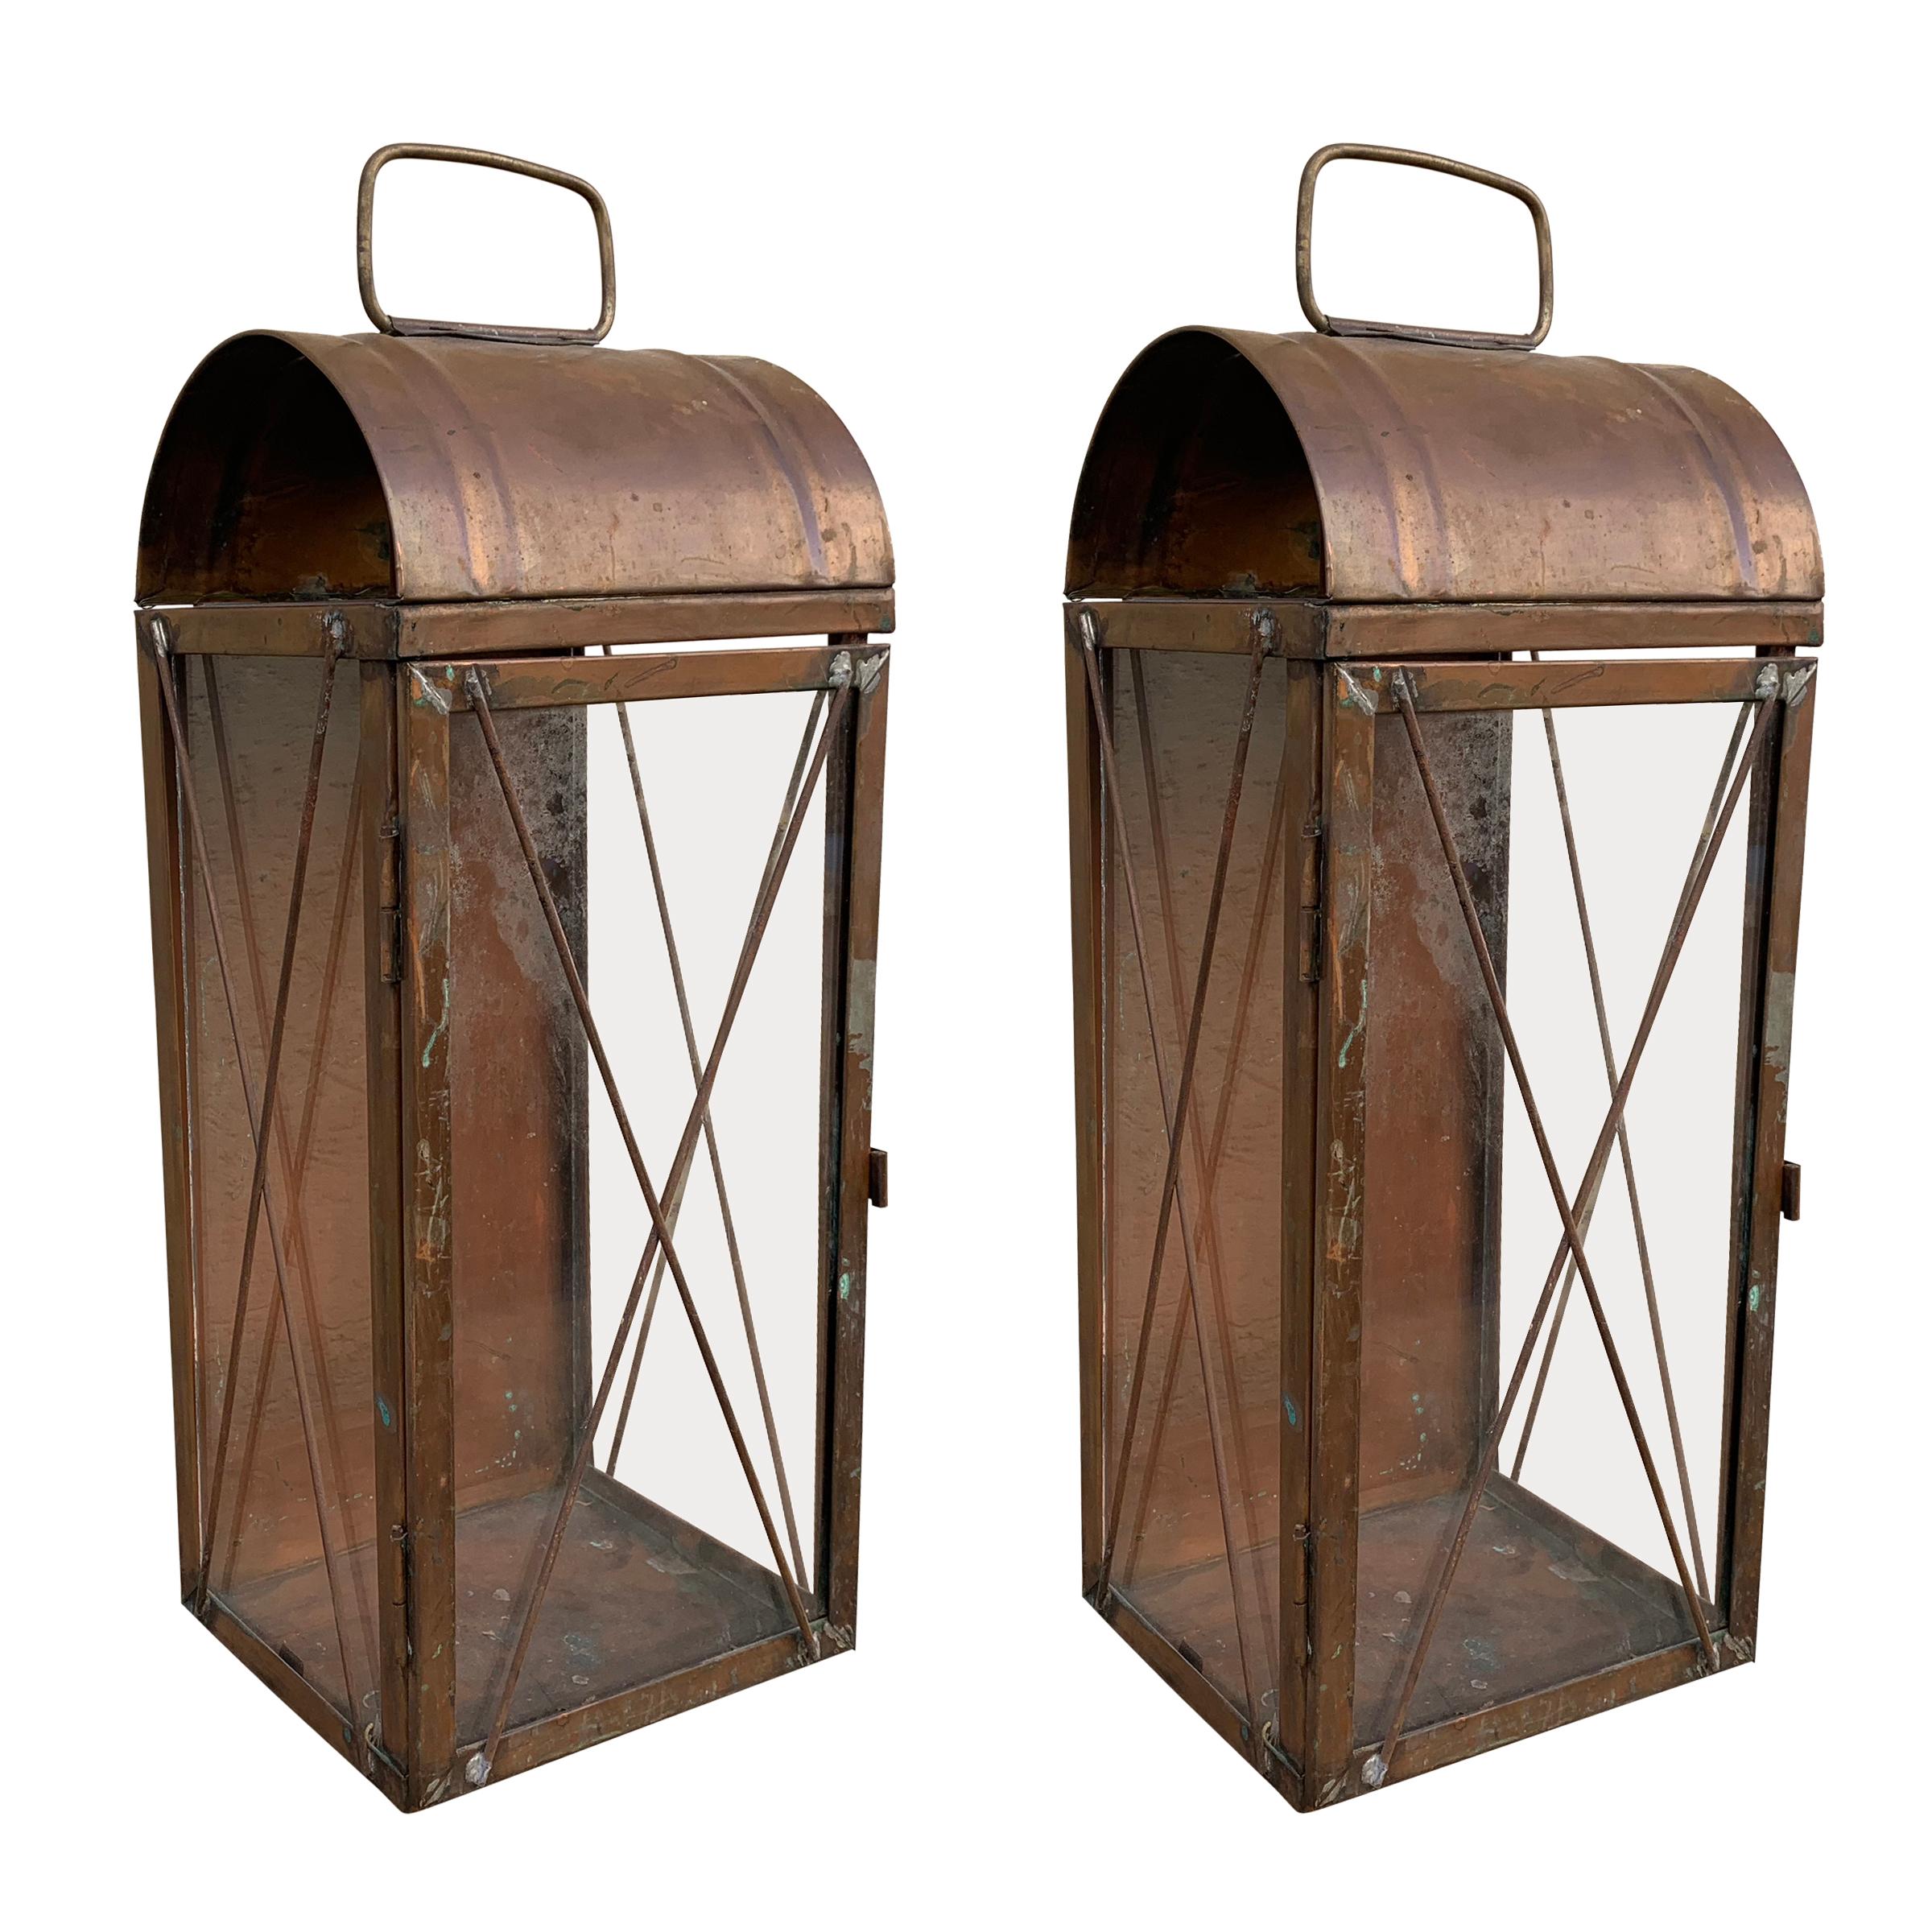 Pair of American Copper Lanterns